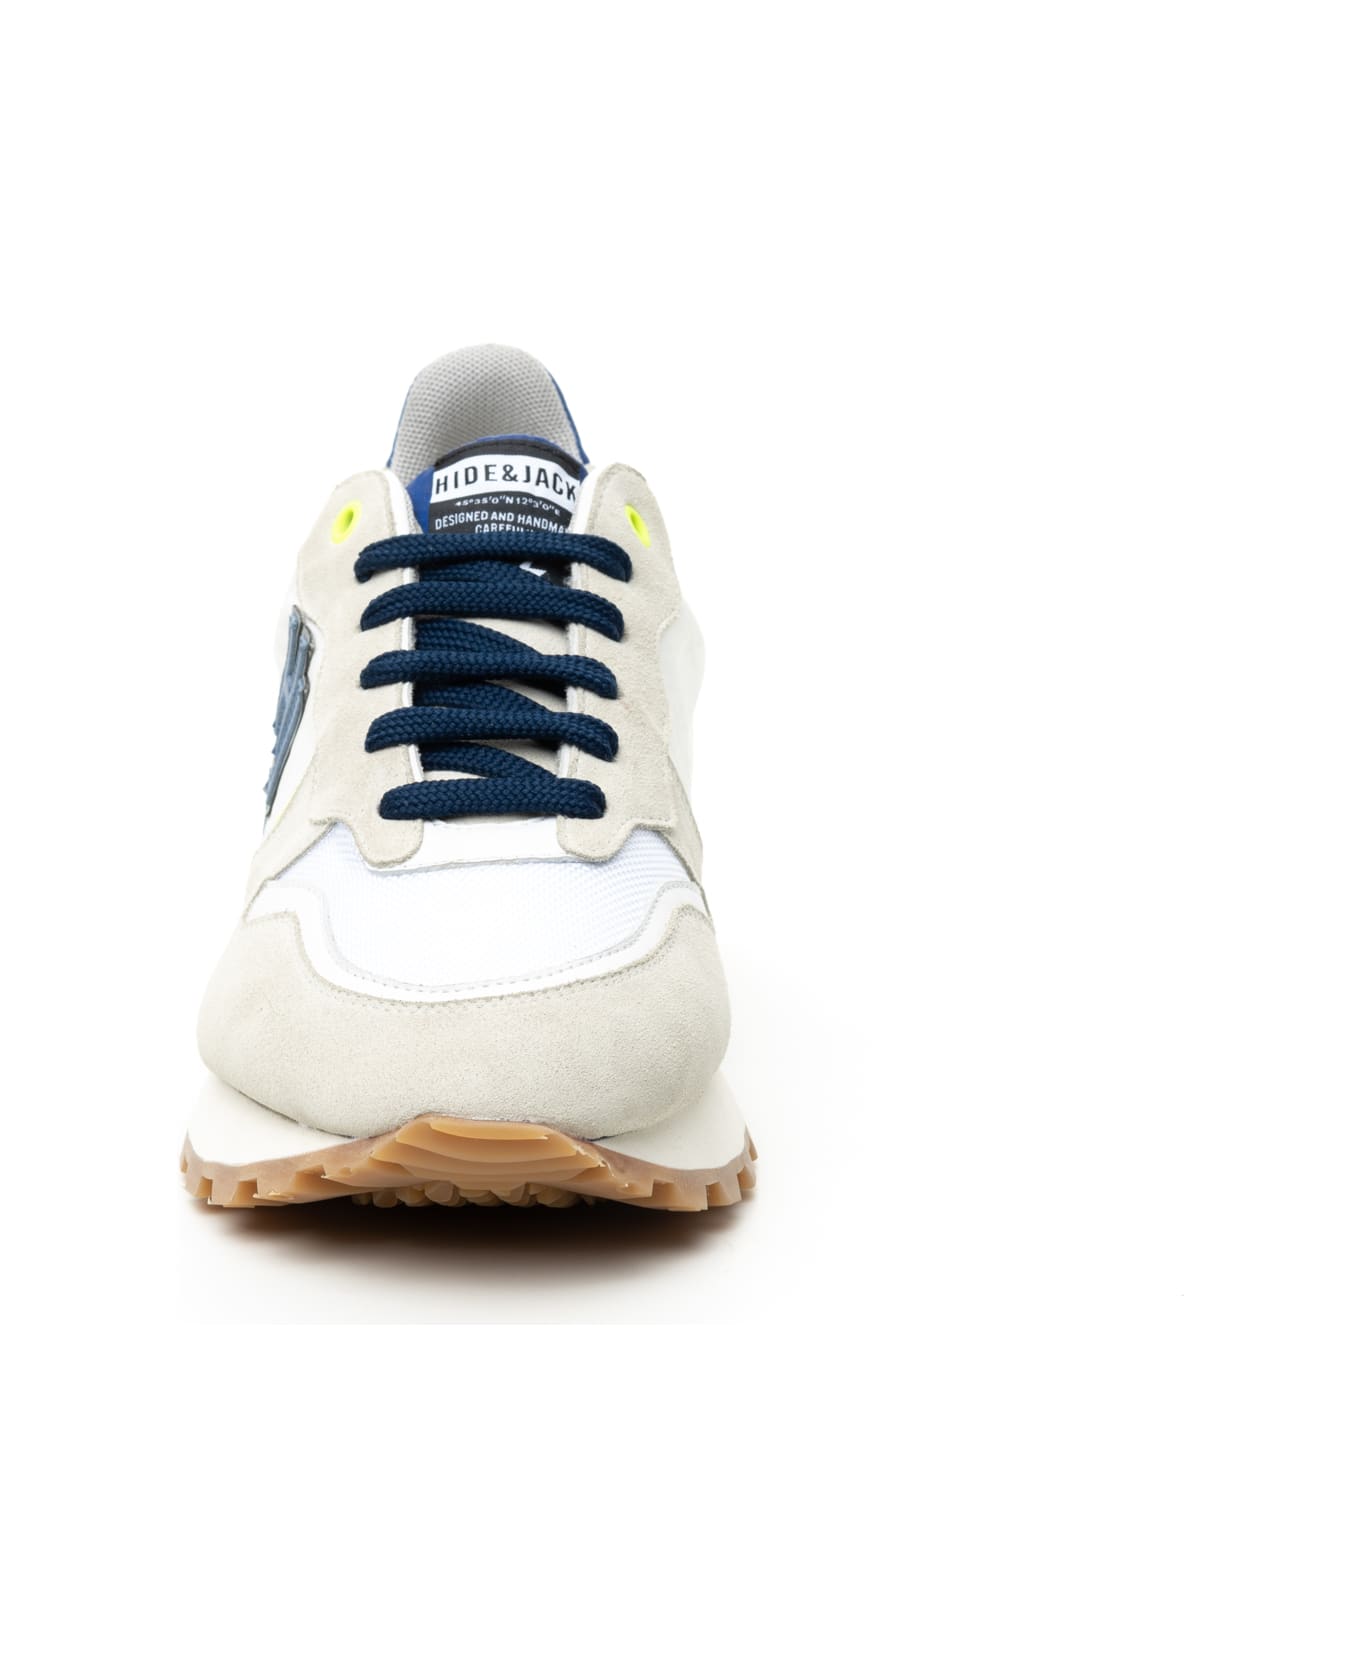 Hide&Jack Low Top Sneaker - Running Over Blue Yellow Grey - BLUE YELLOW GREY